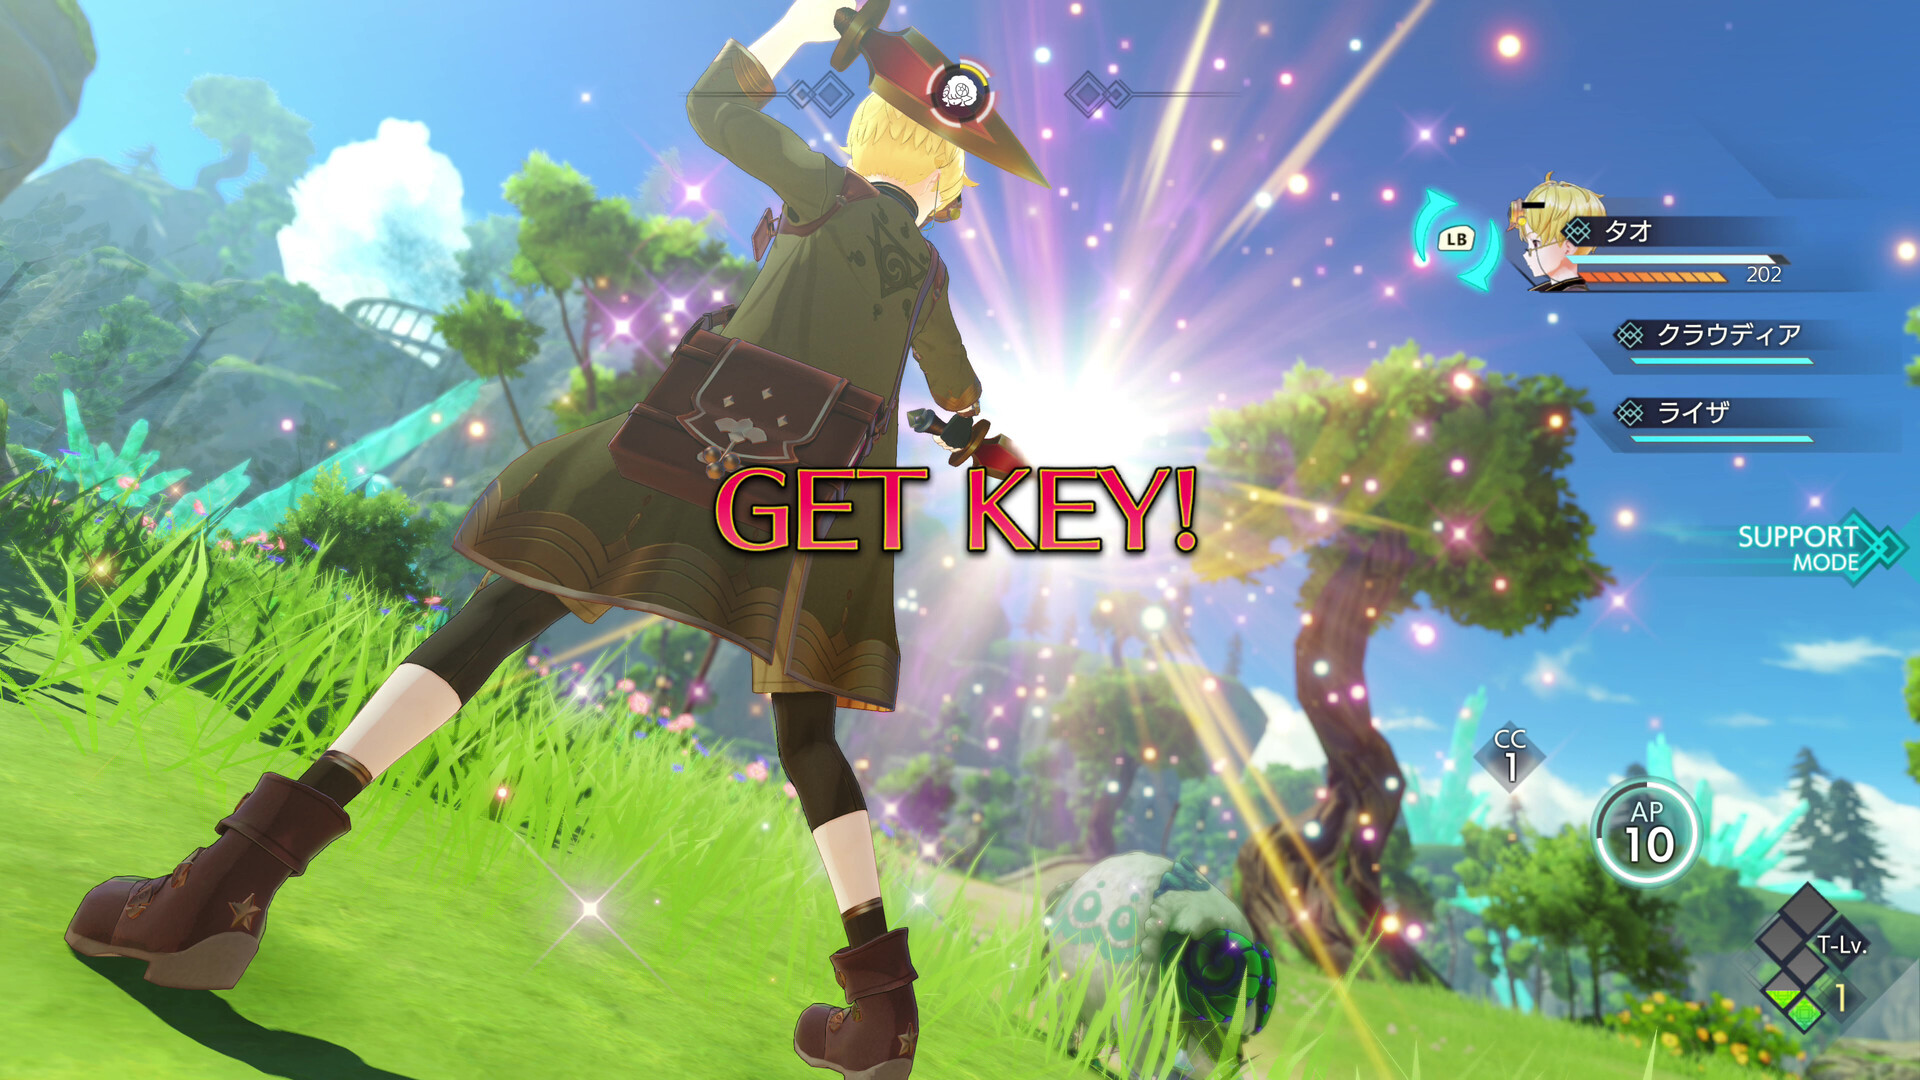 Atelier Ryza 3: Alchemist of the End & the Secret Key Ultimate Edition EU Steam CD Key 89.47 usd